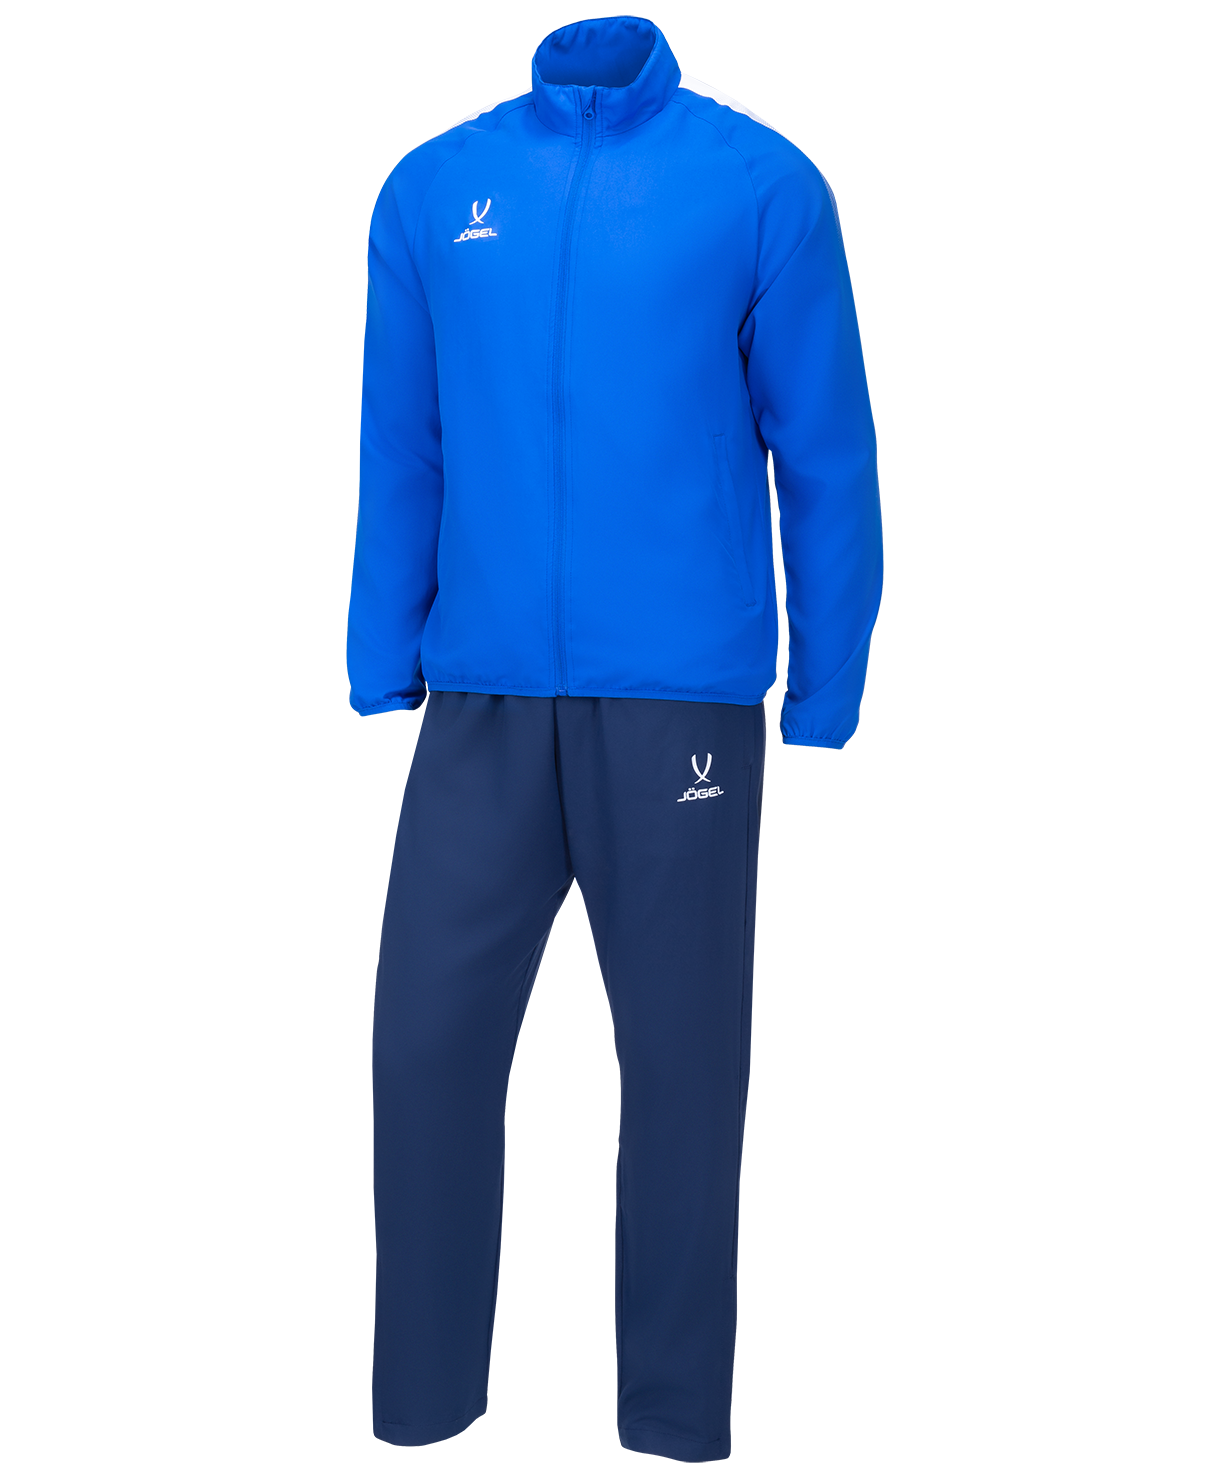 Костюм спортивный Jogel Camp Lined Suit, синий/темно-синий, детский (YL) костюм спортивный jogel camp lined suit синий темно синий